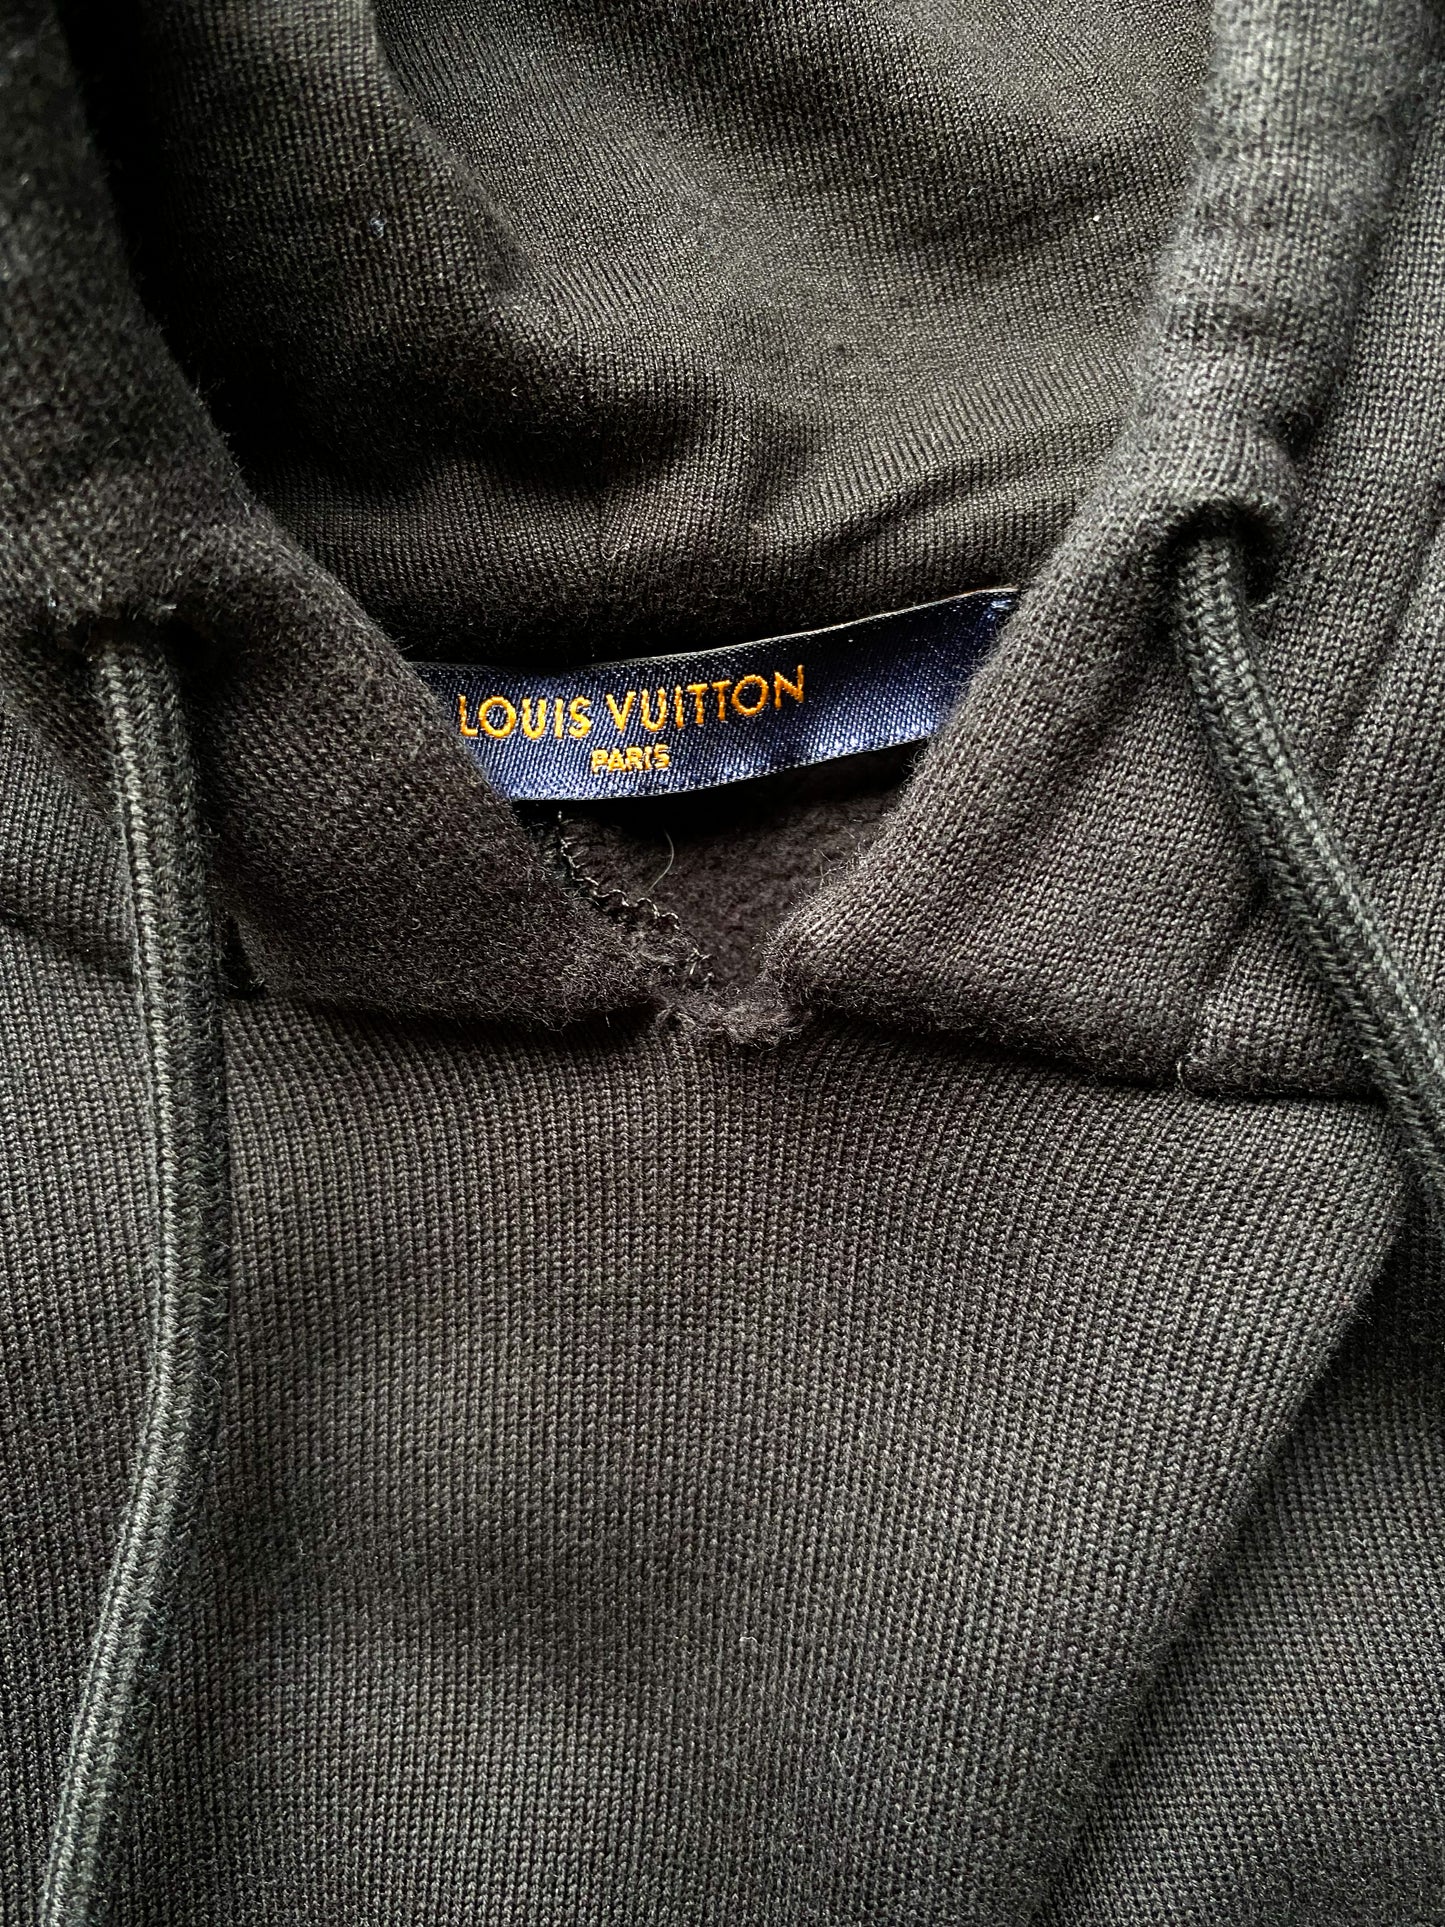 Louis Vuitton Logo Torn Ripped Black Monogram Full-Zip Hooded